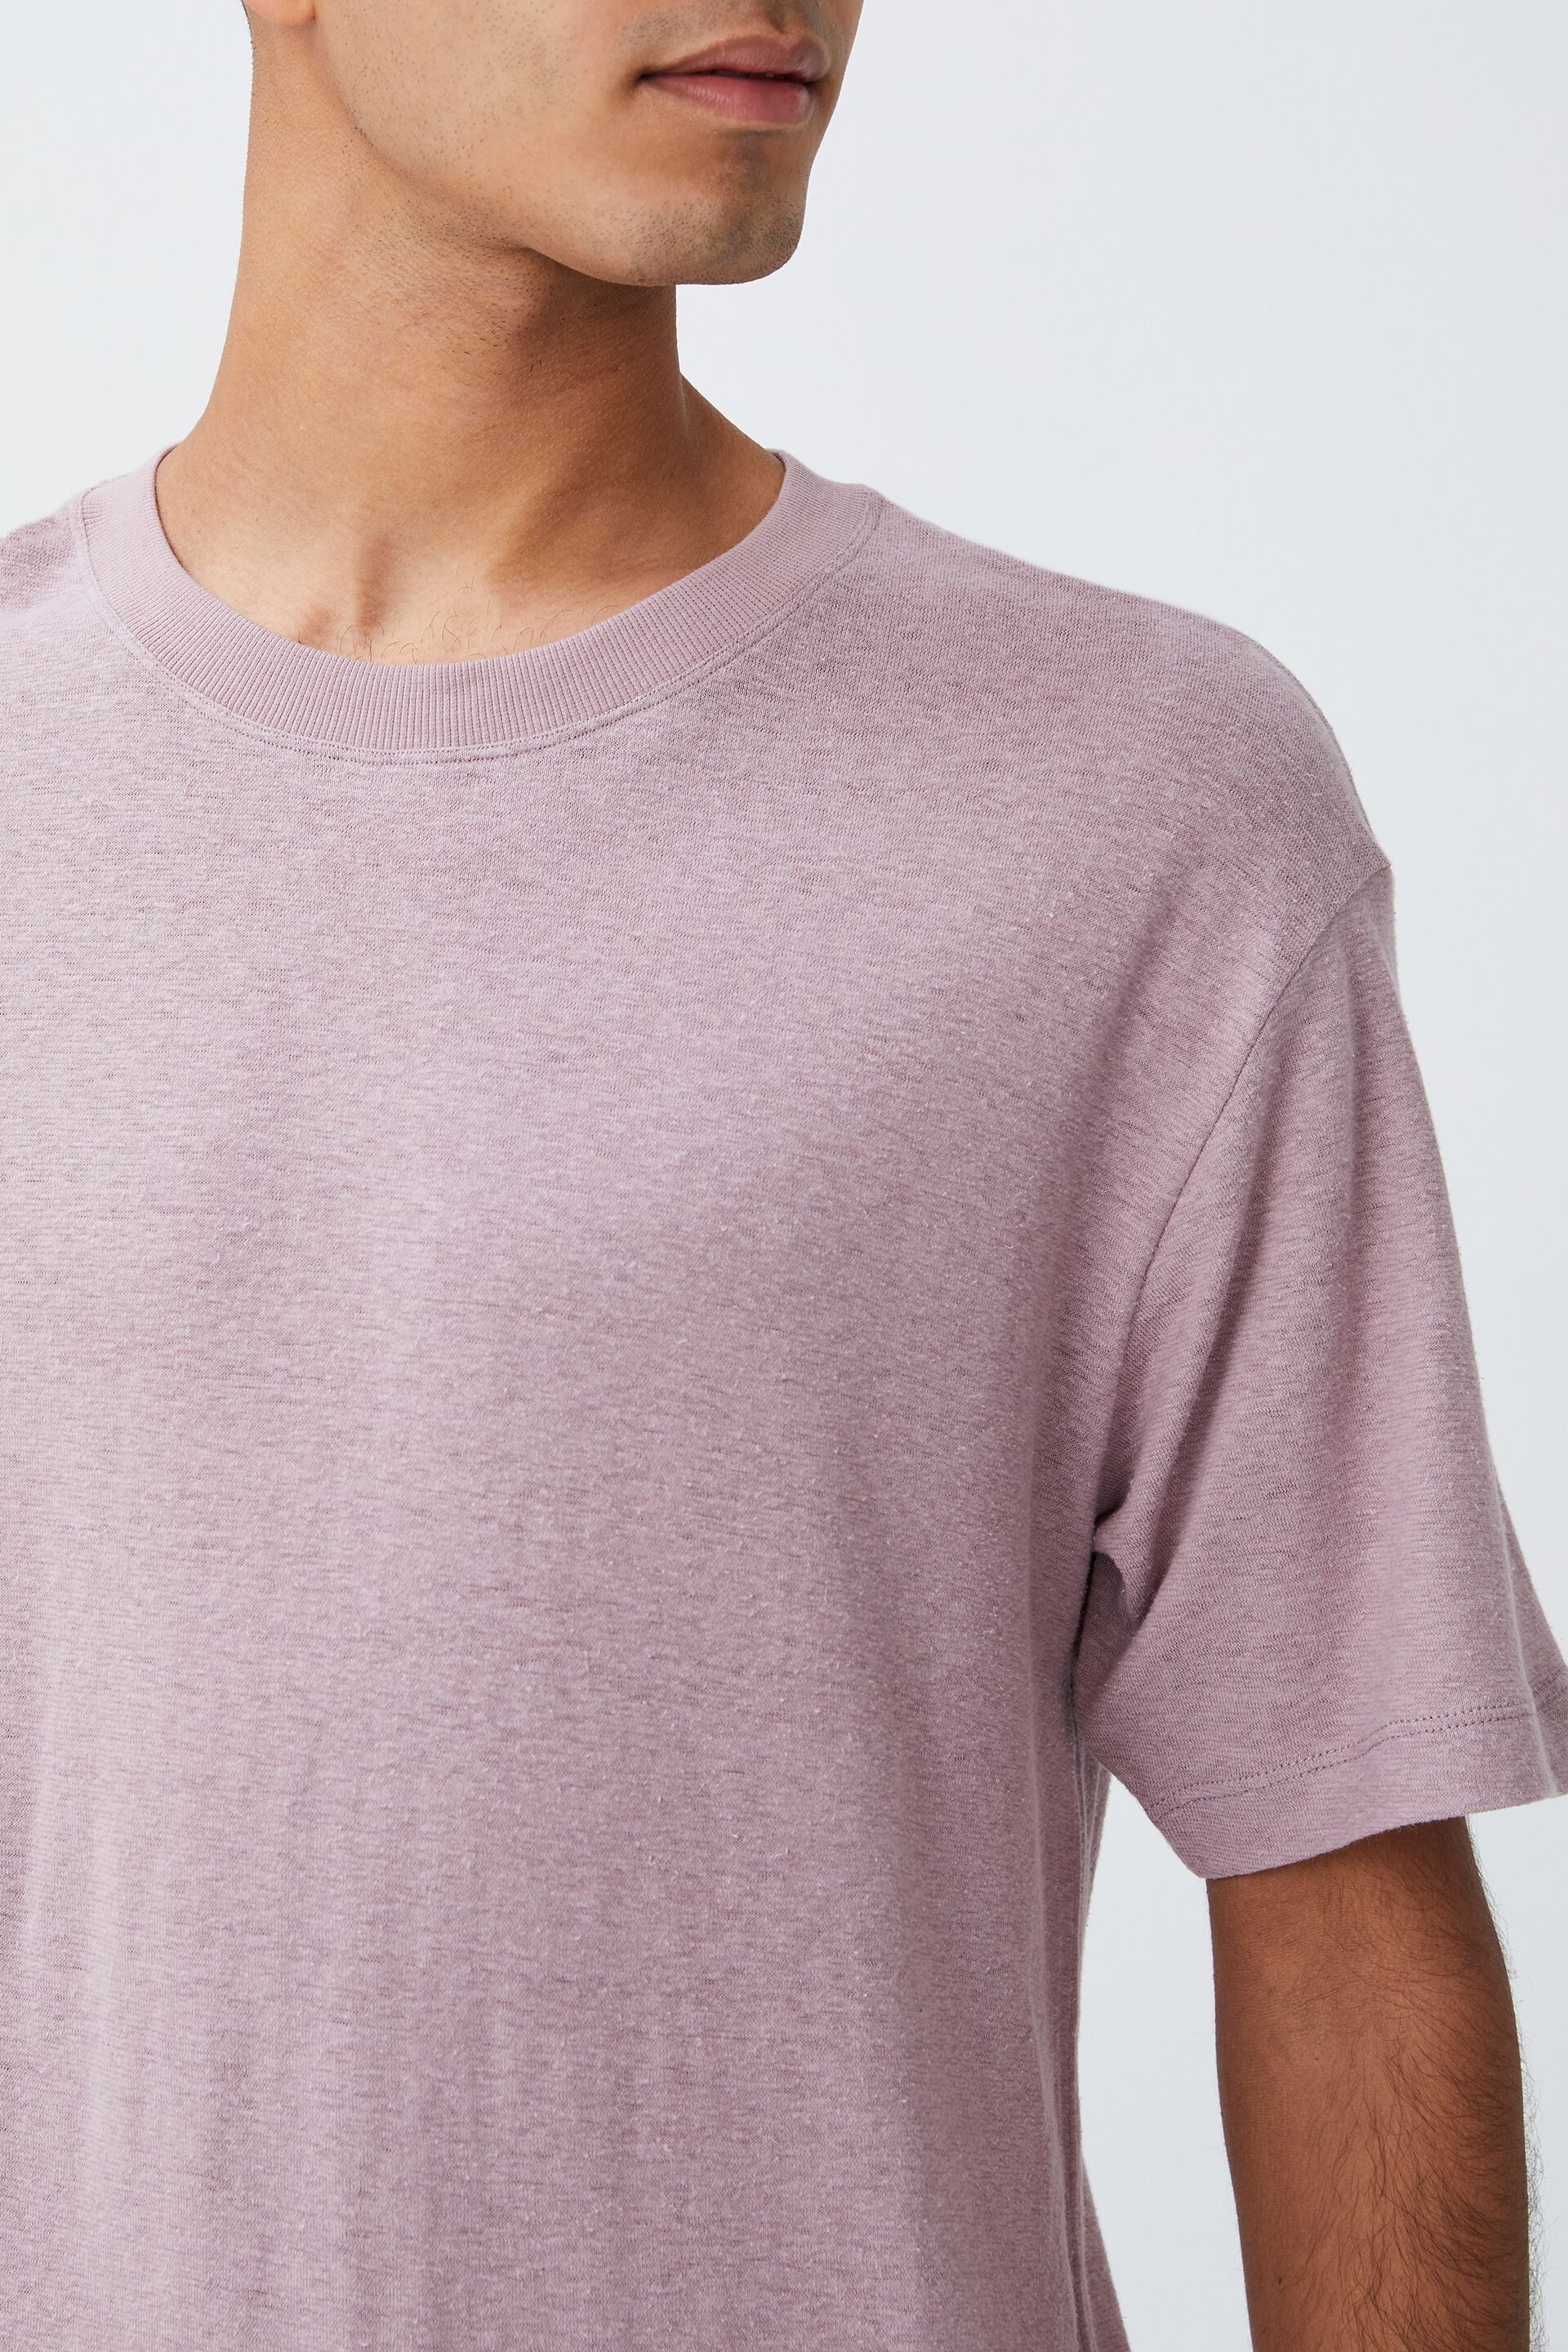 Women's Long Sleeve Hemp and Organic Cotton Plus Size T-Shirt XL 2XL